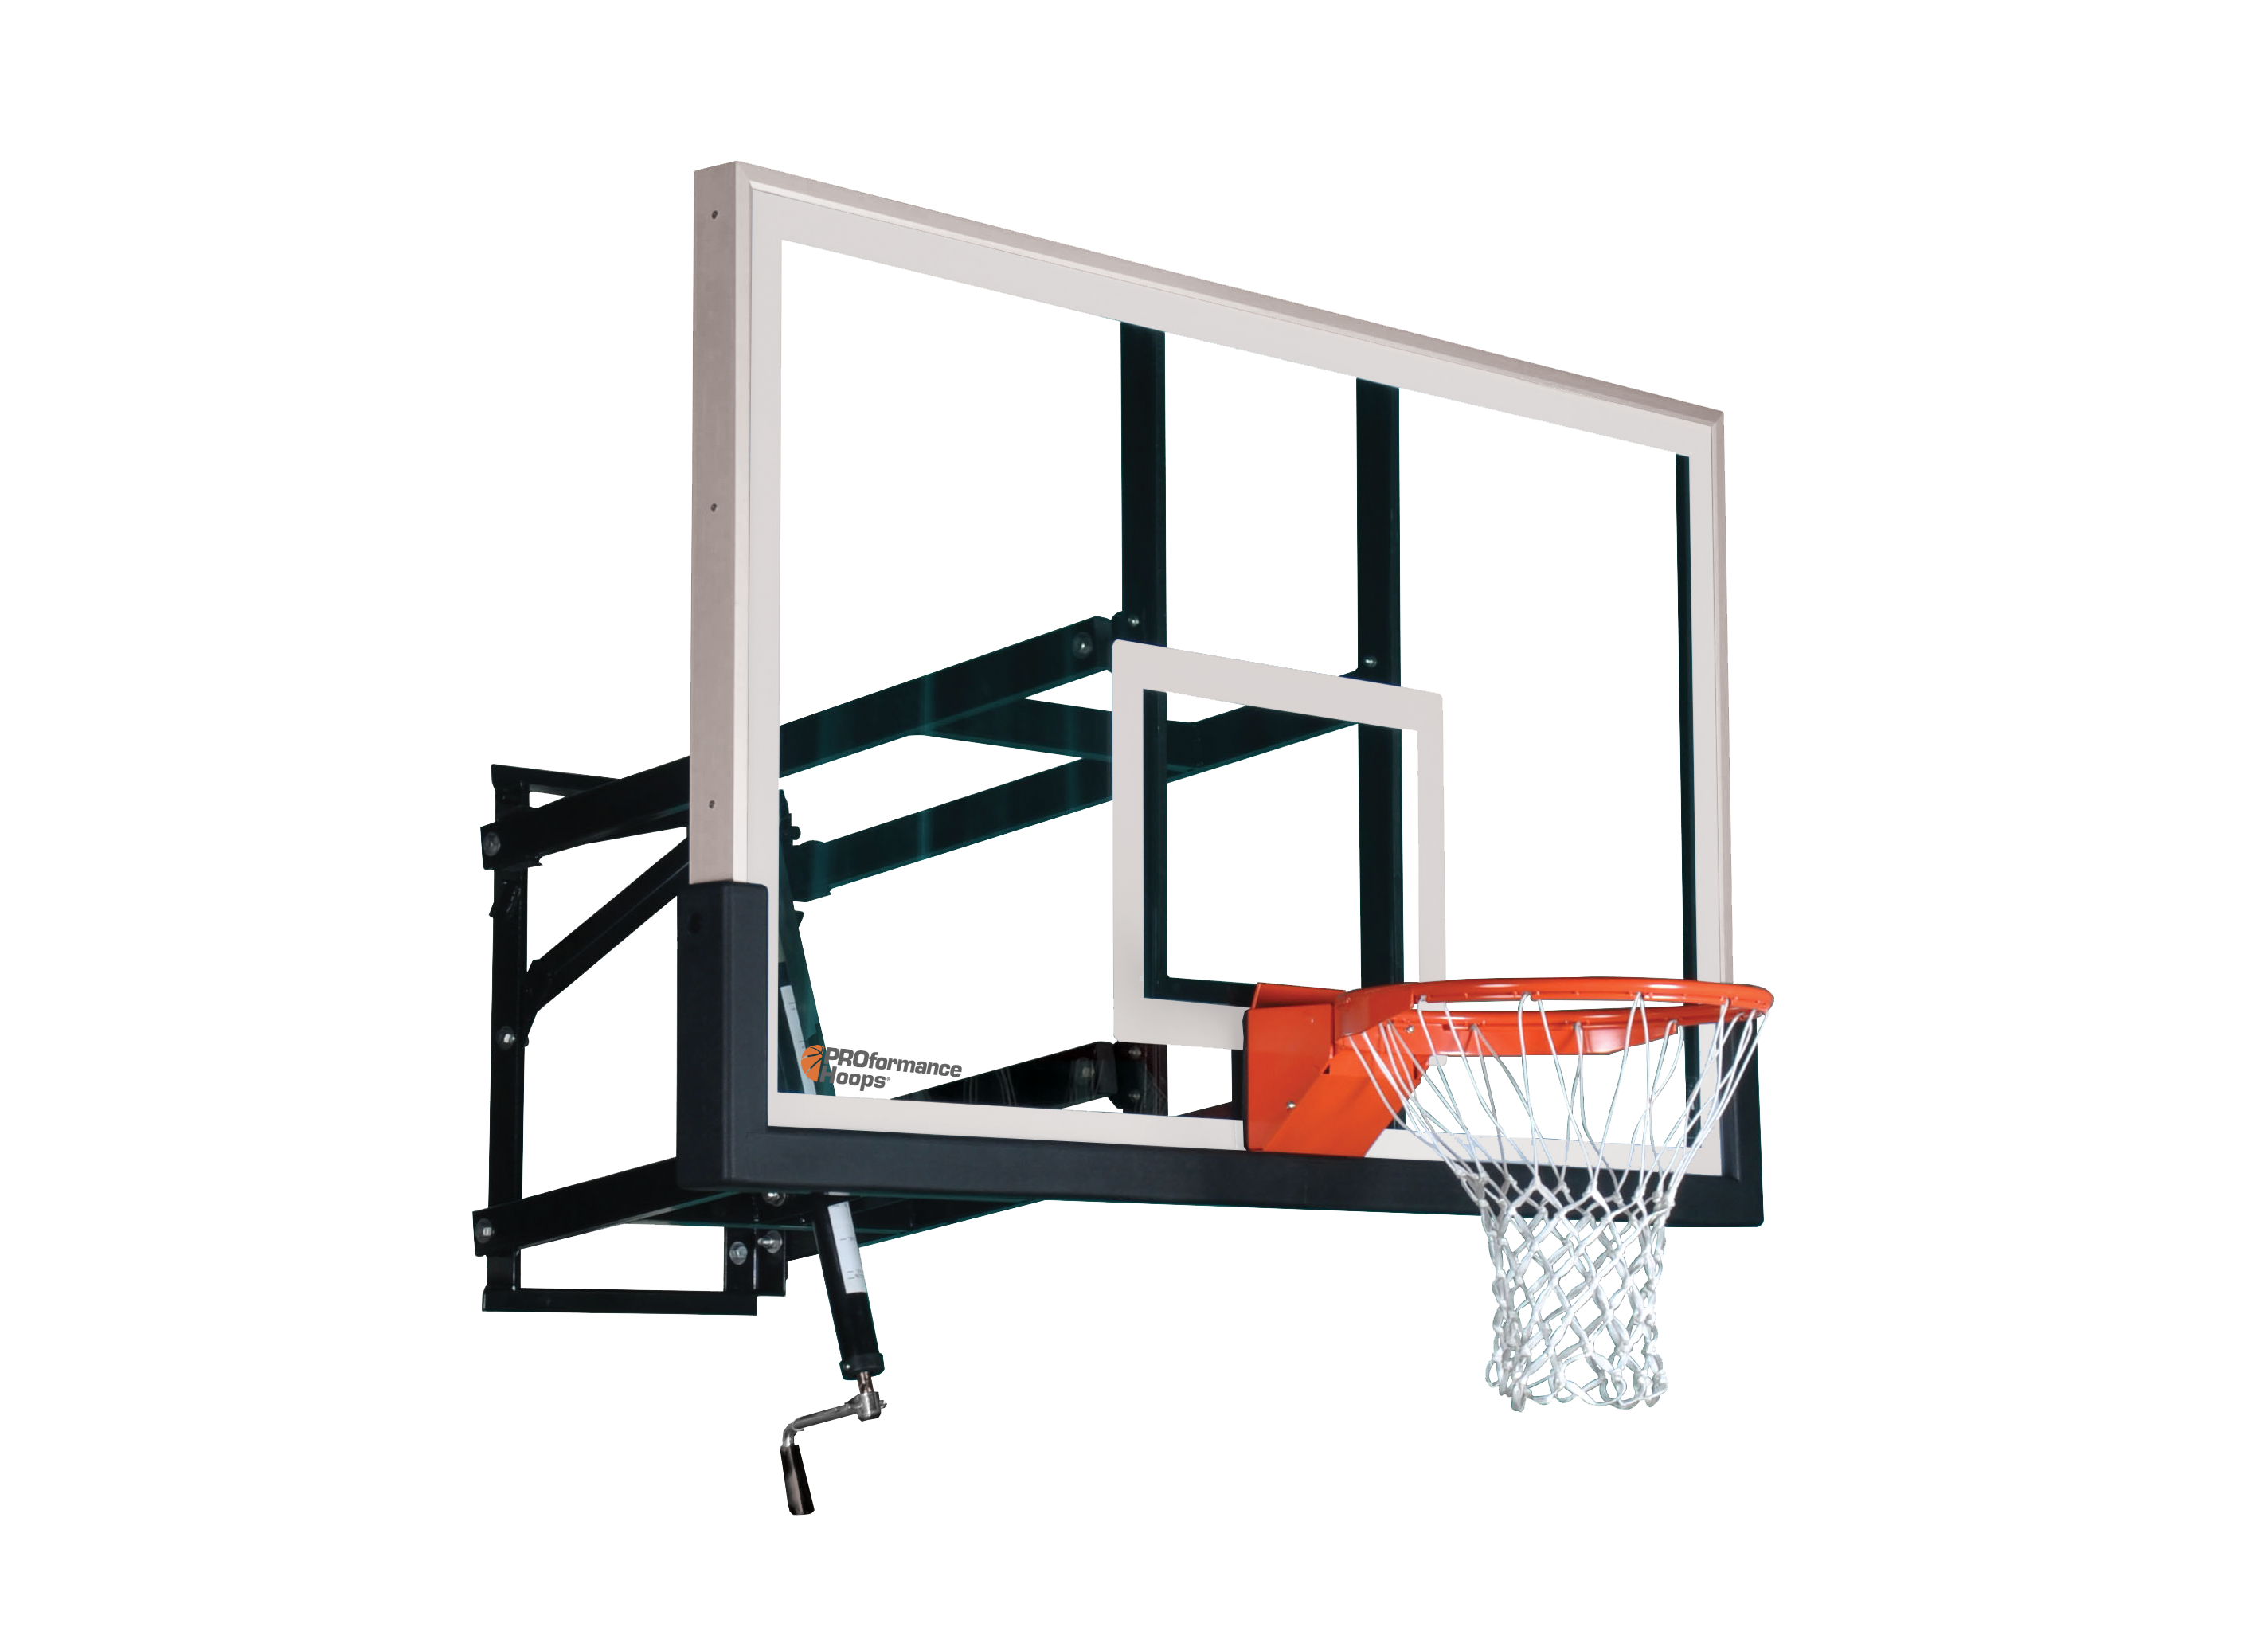 Proformance Wall Mount Basketball Hoop Wm Superior Play